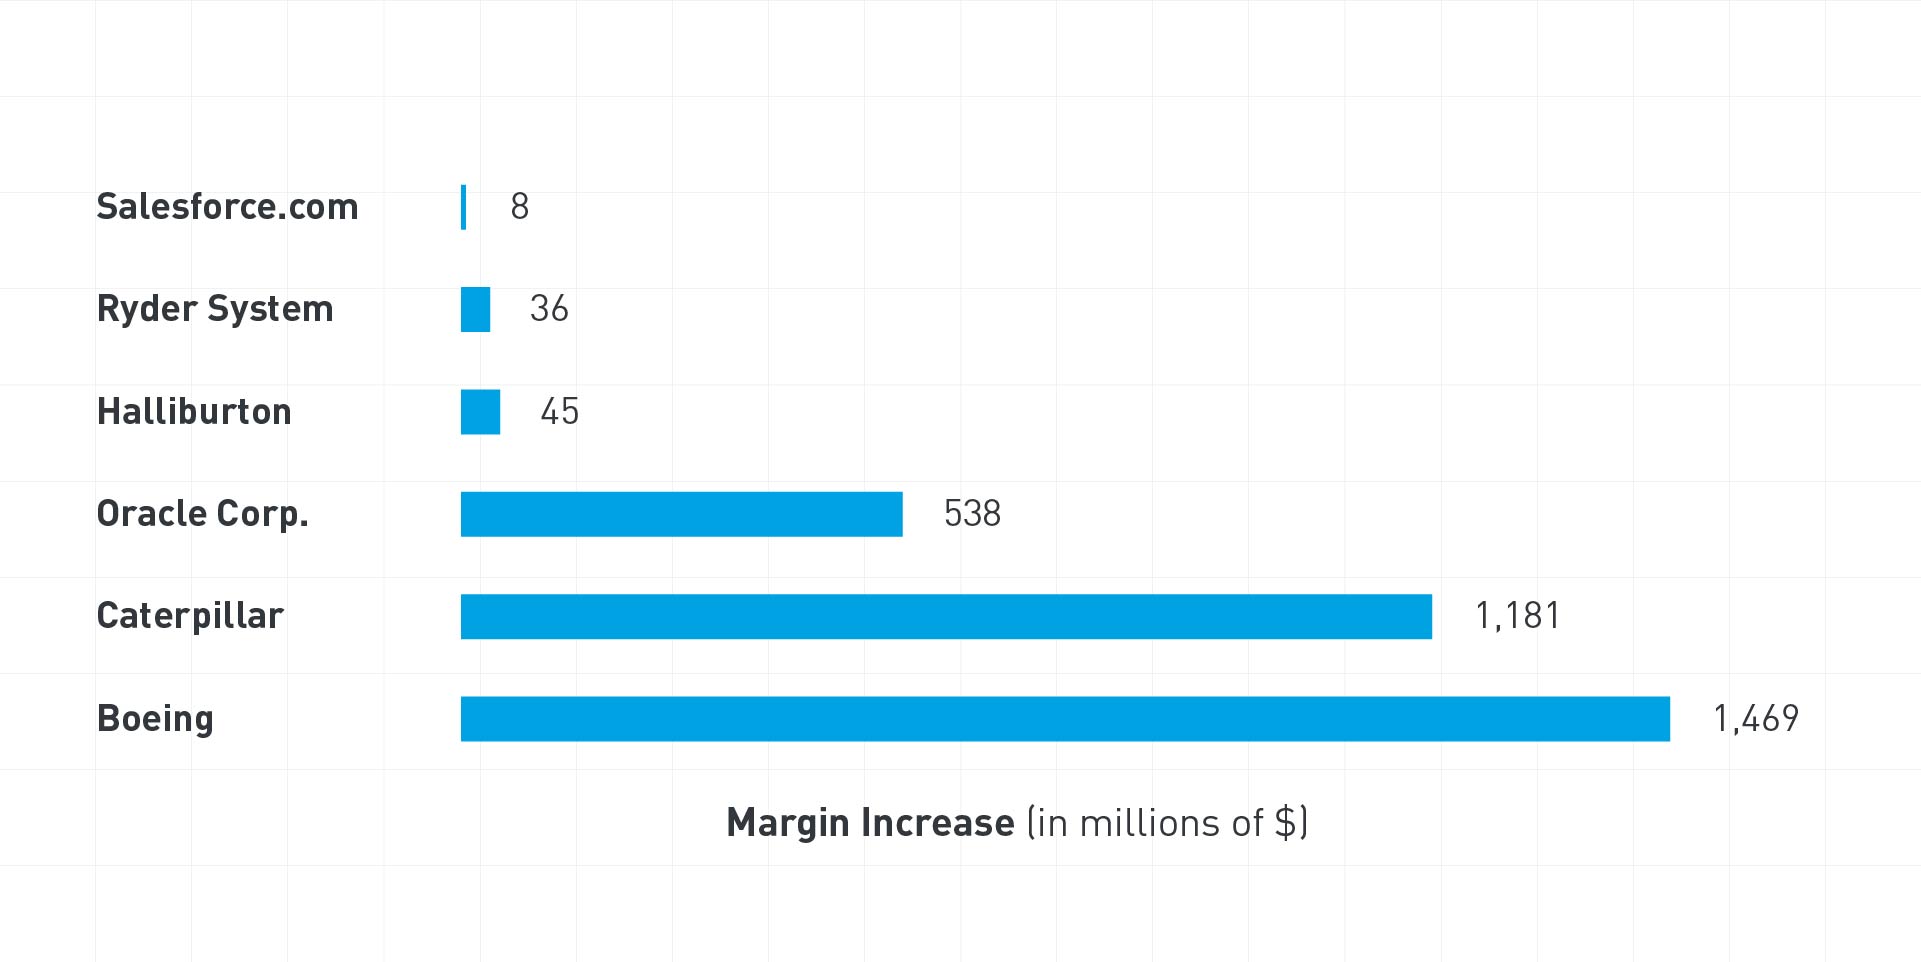 Margin Increase for multiple companies